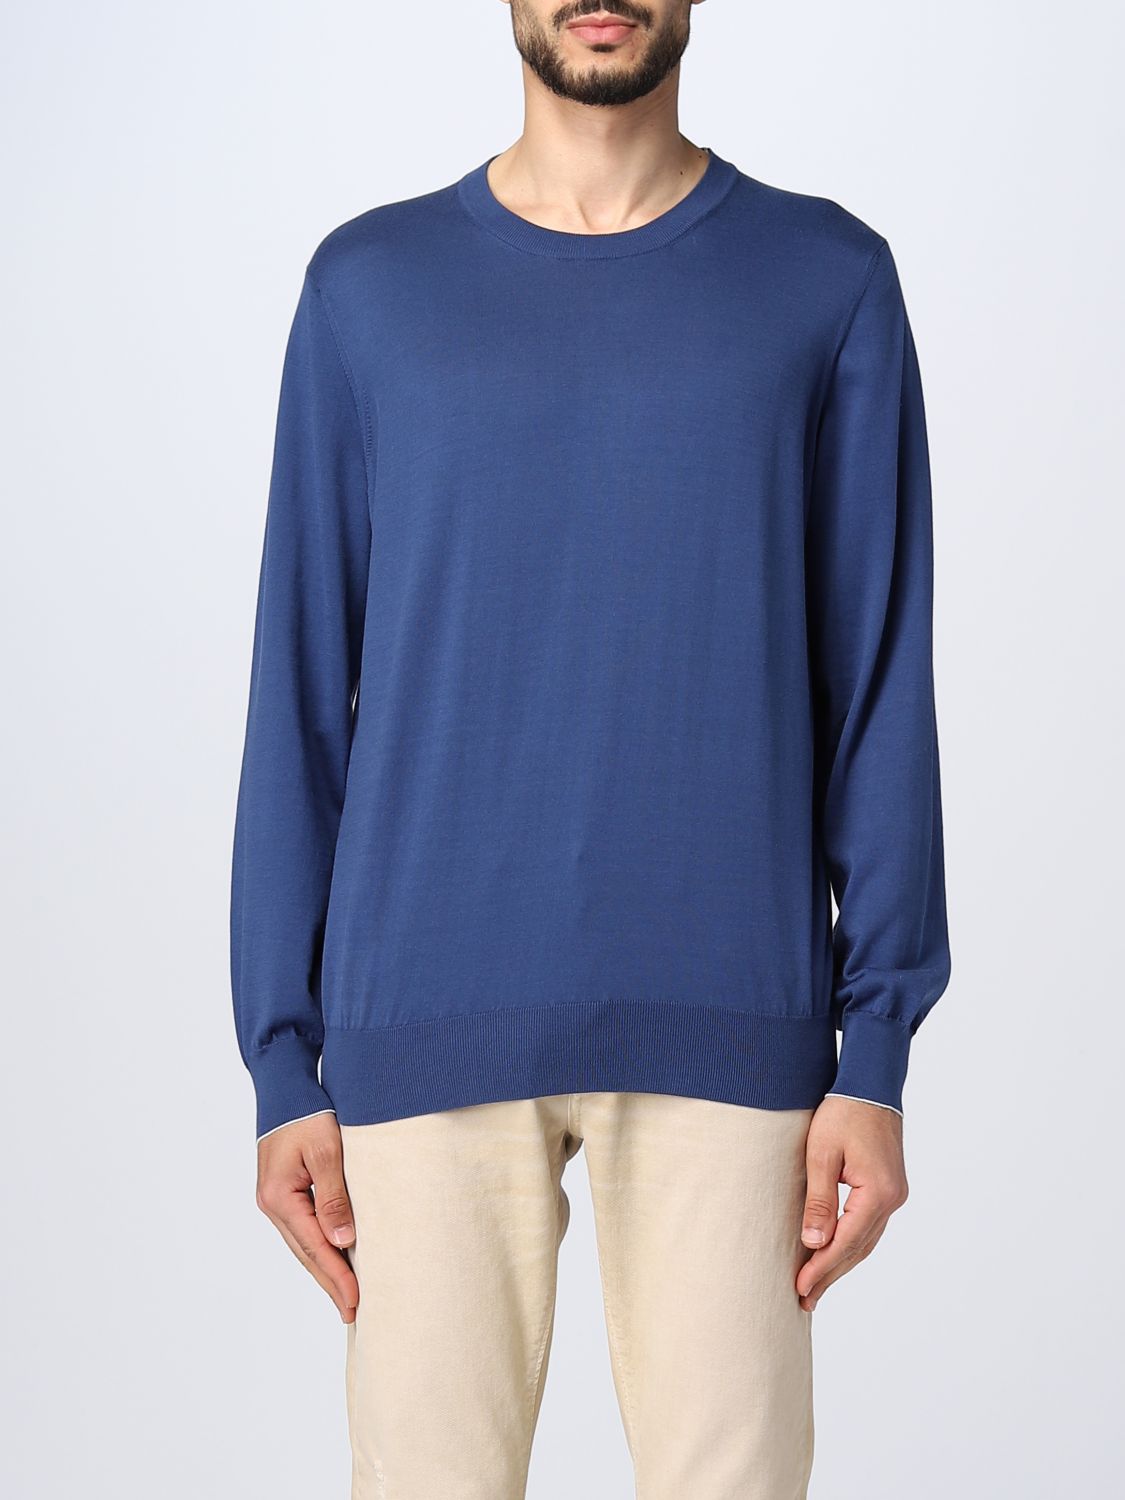 BRUNELLO CUCINELLI: sweater for man - Blue 1 | Brunello Cucinelli ...